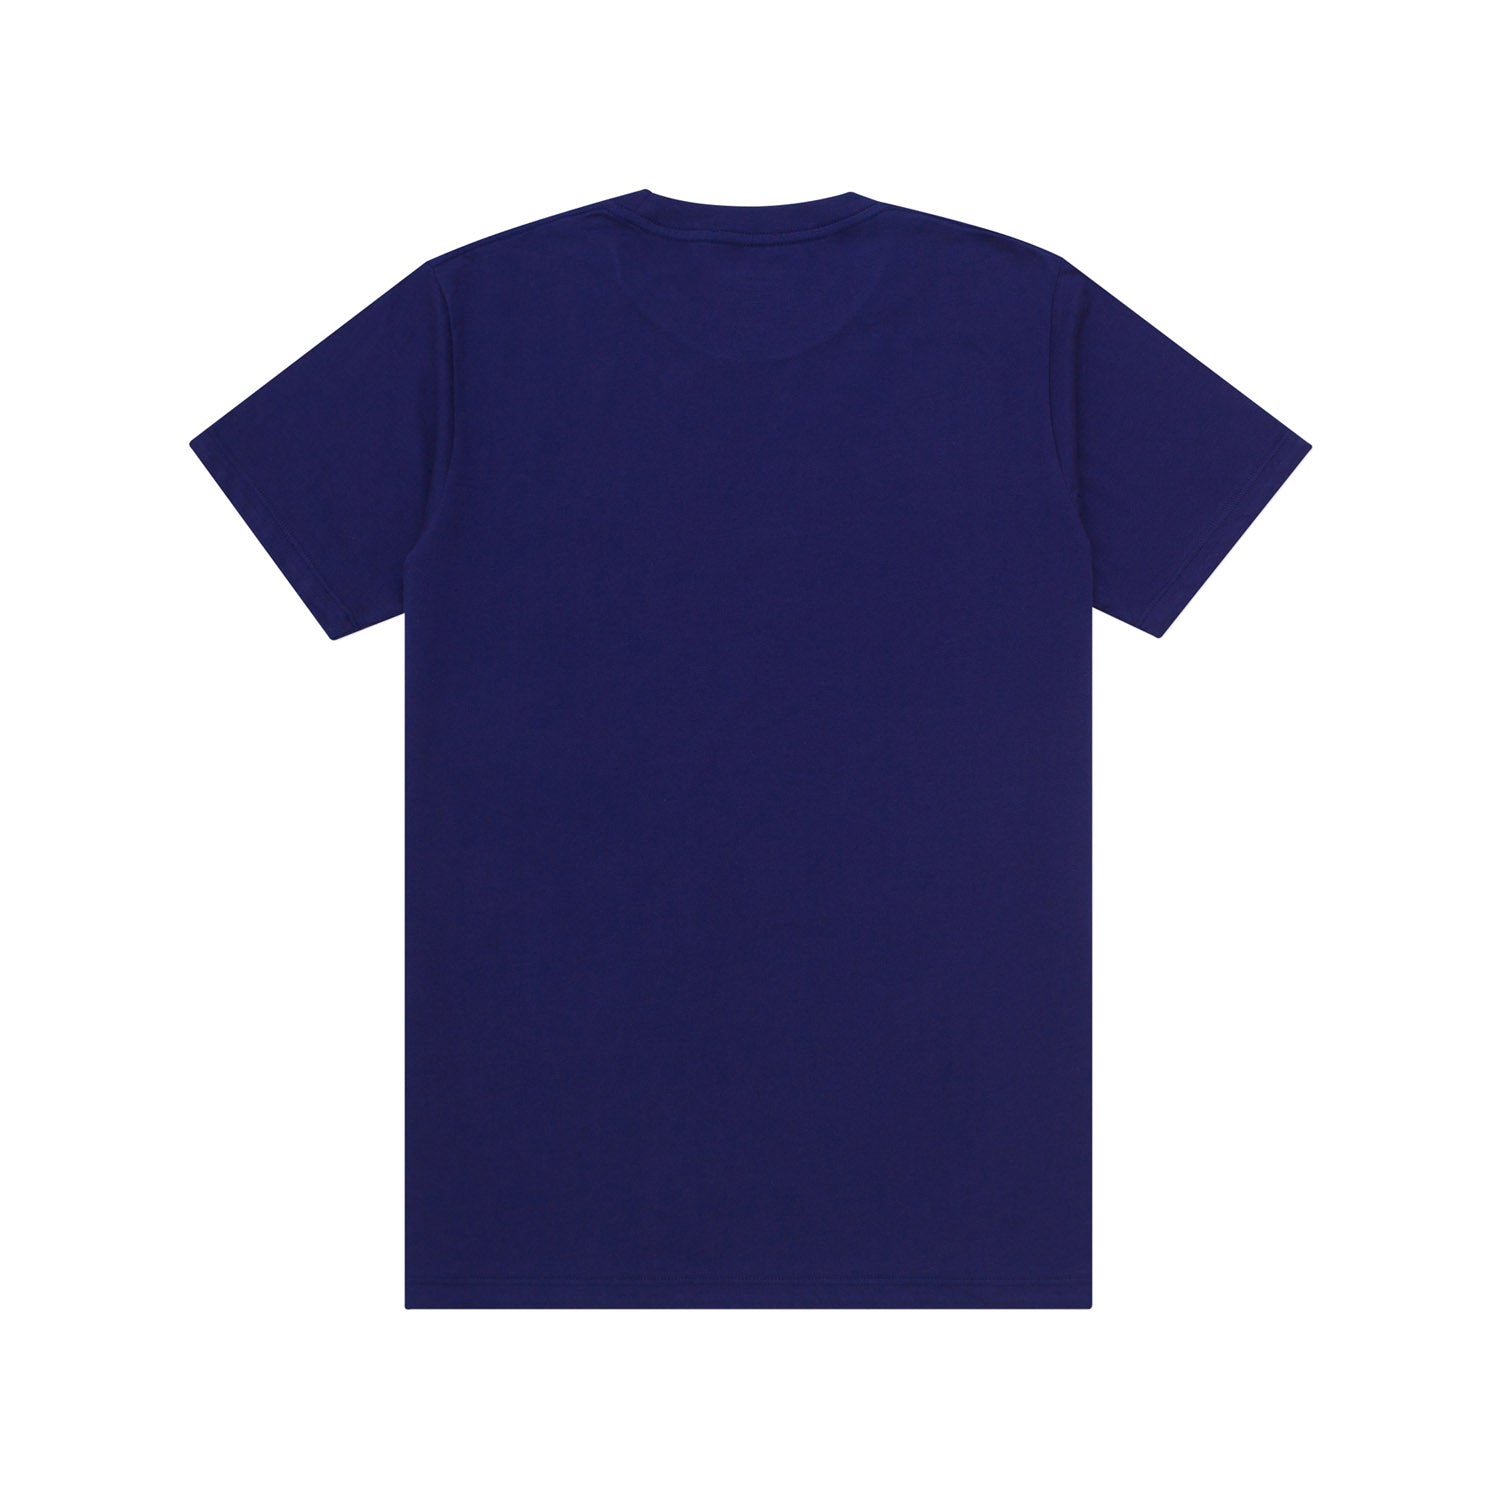 T-Shirt CROWN LOGO SS NAVY BLUE